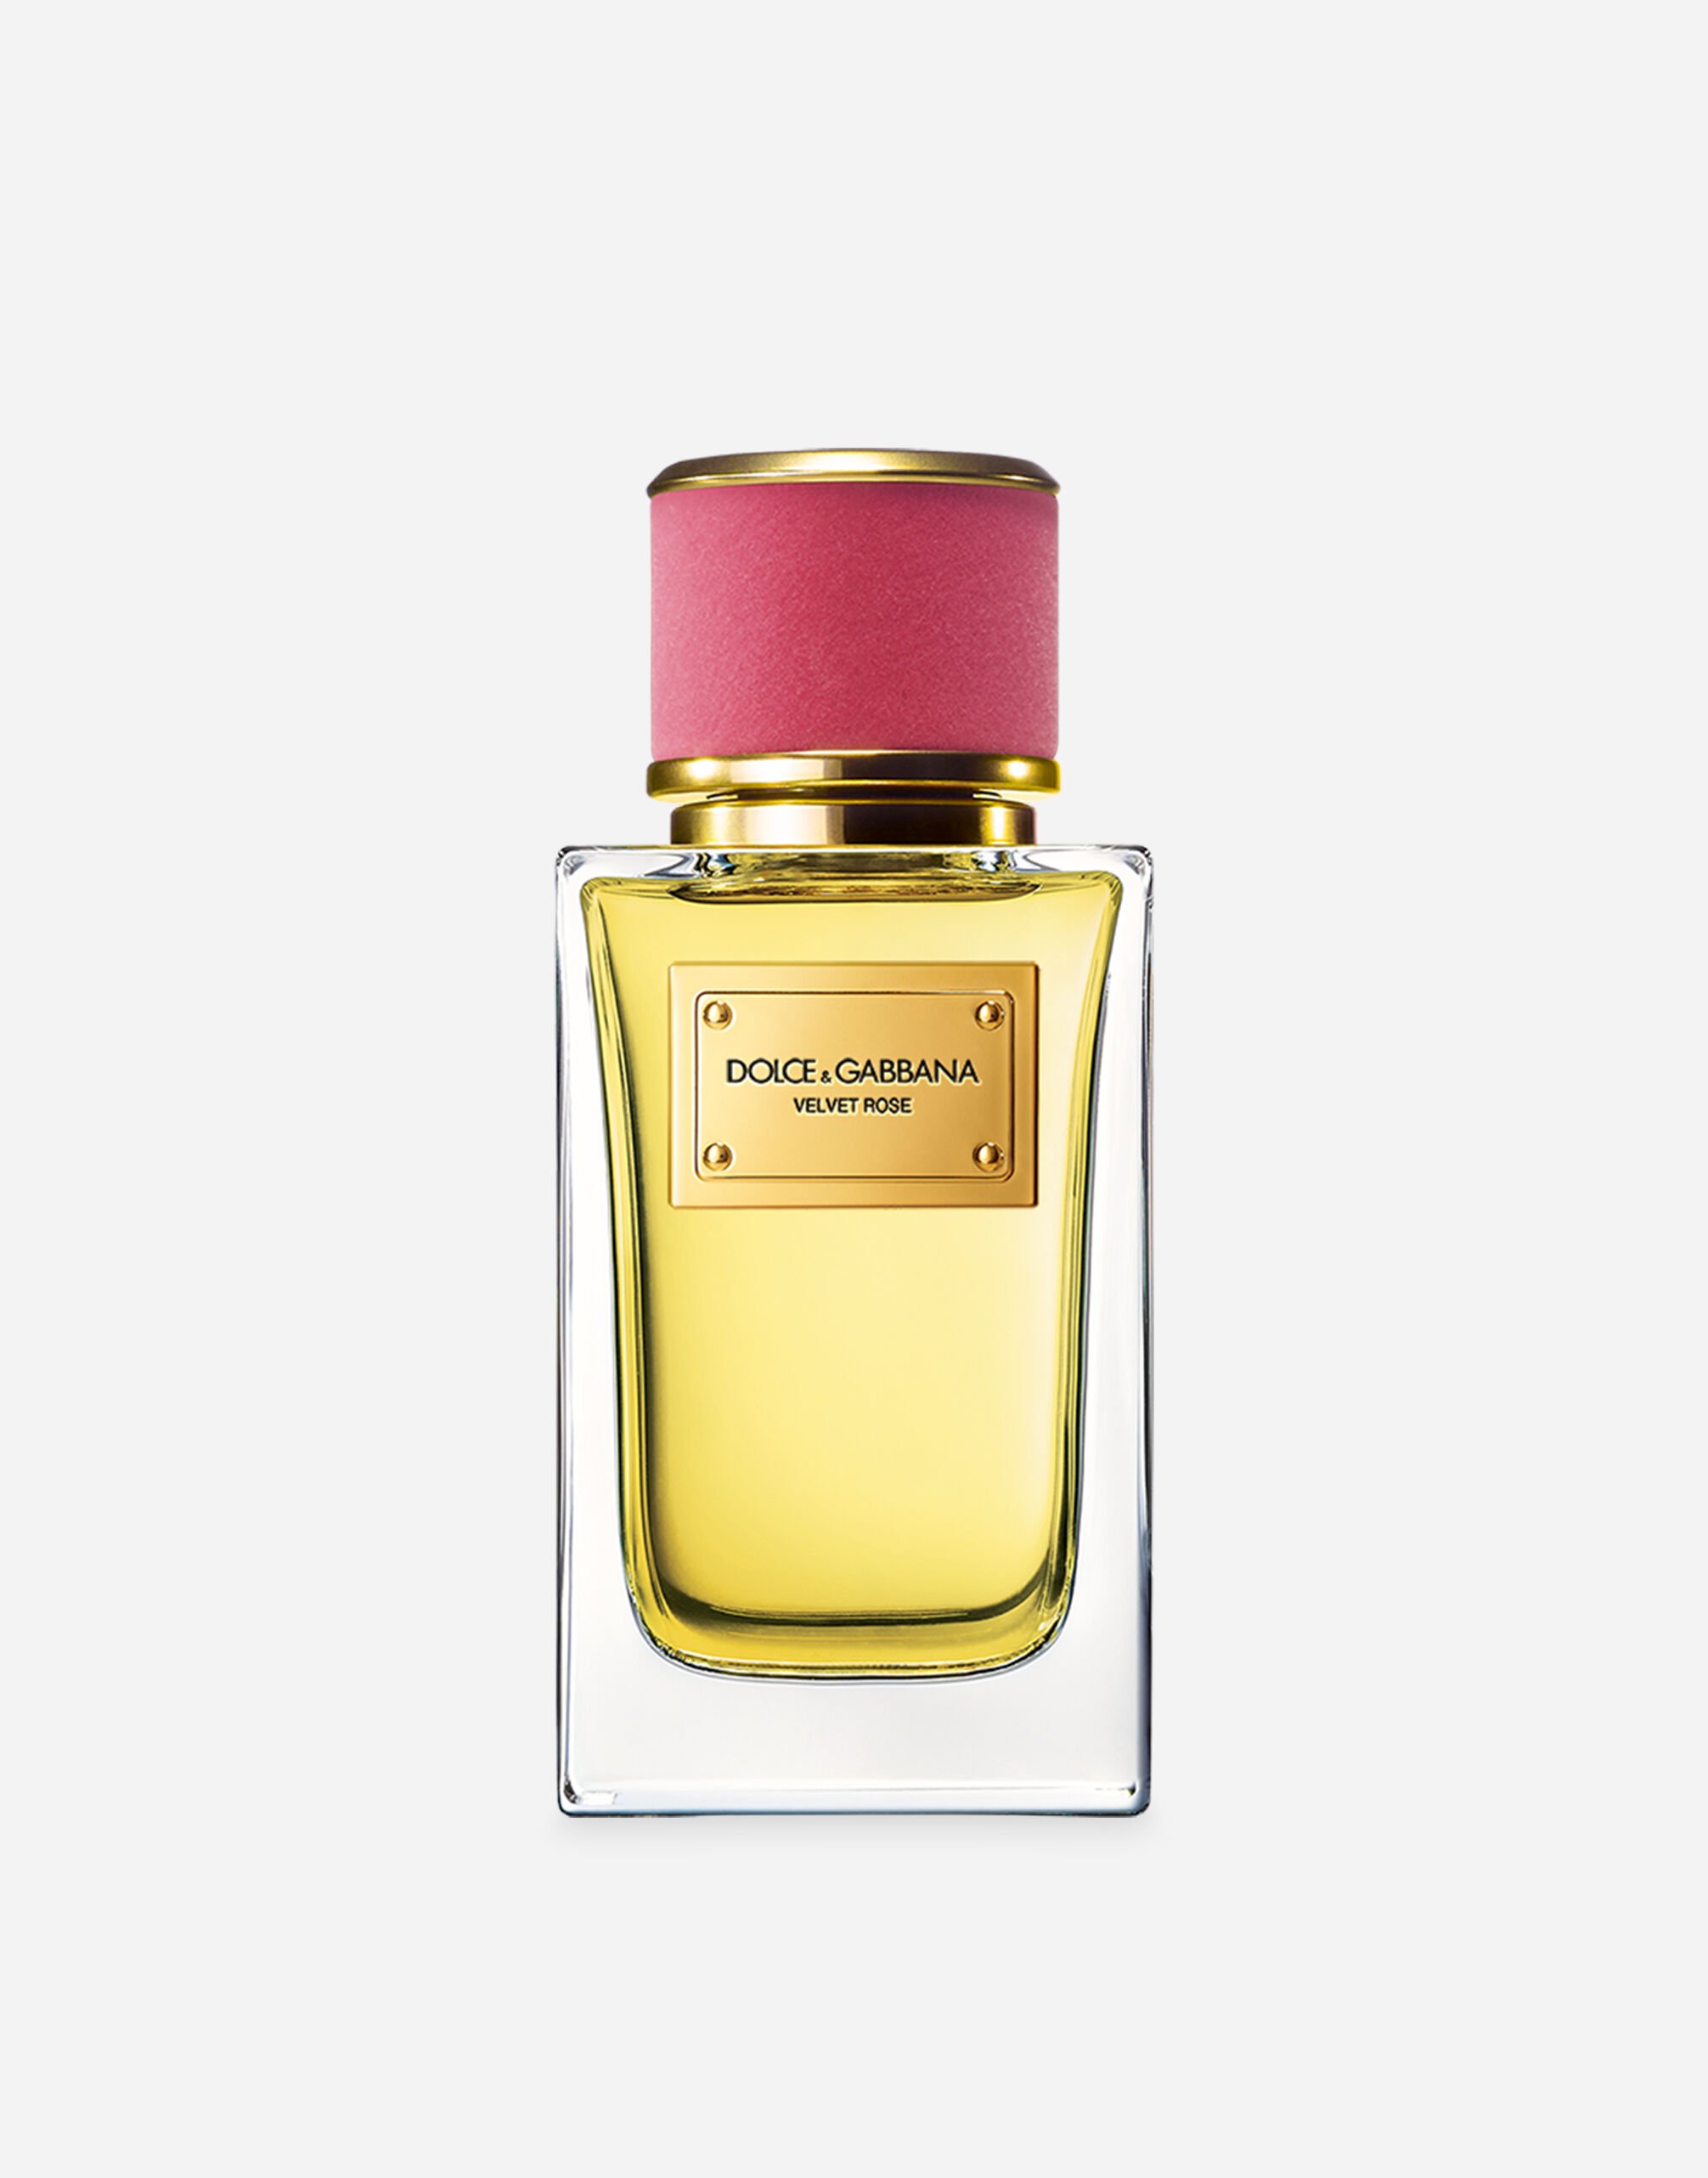 Dolce & Gabbana Velvet Rose Eau de Parfum - VT0063VT000